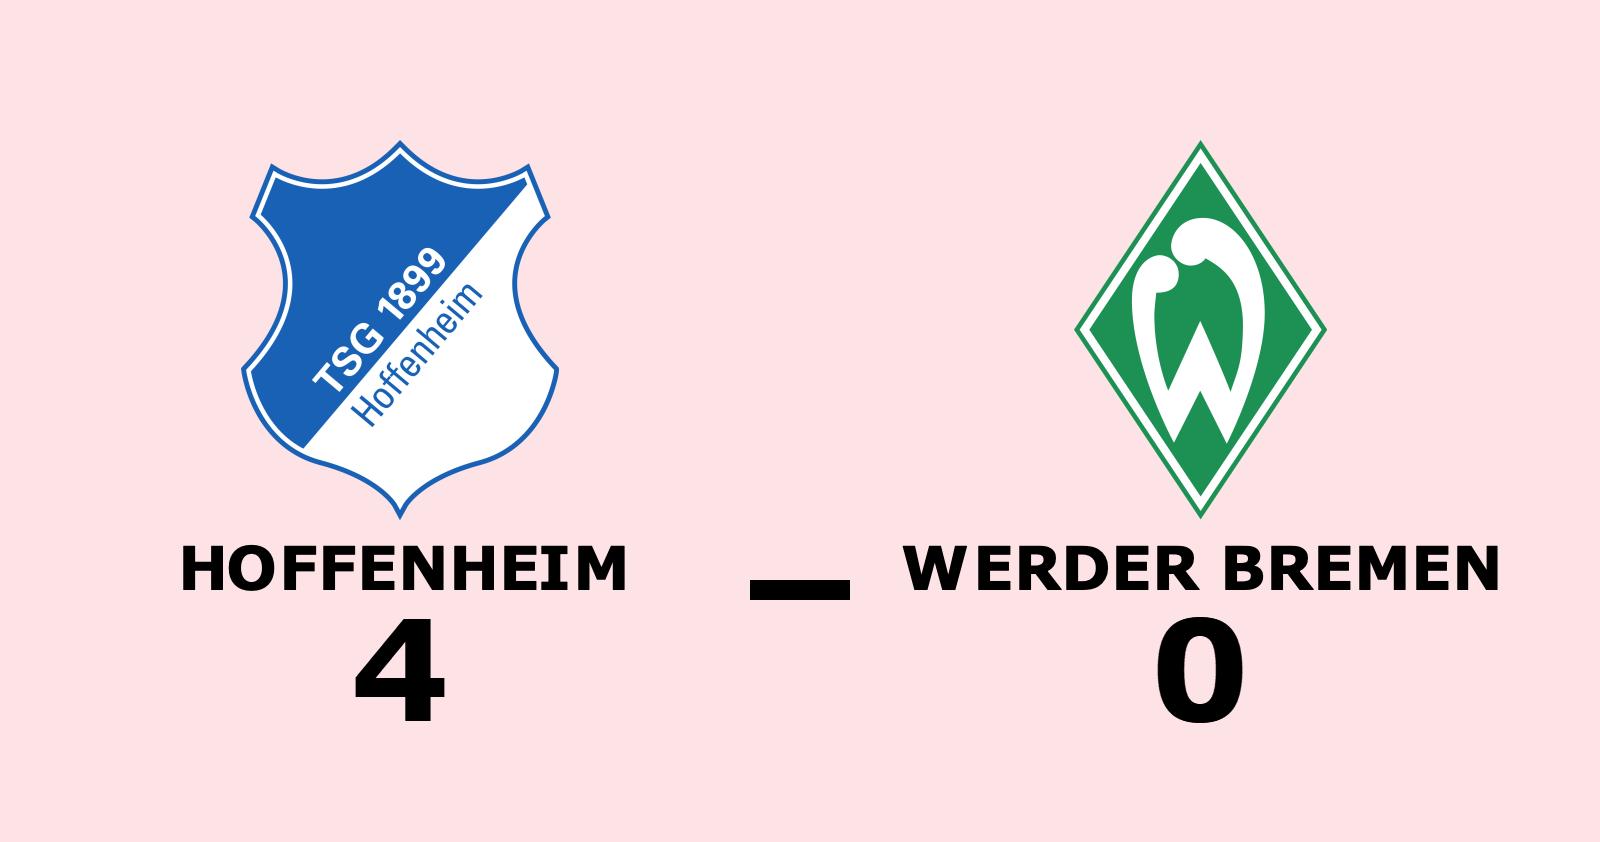 Hoffenheim segrade mot Werder Bremen på hemmaplan